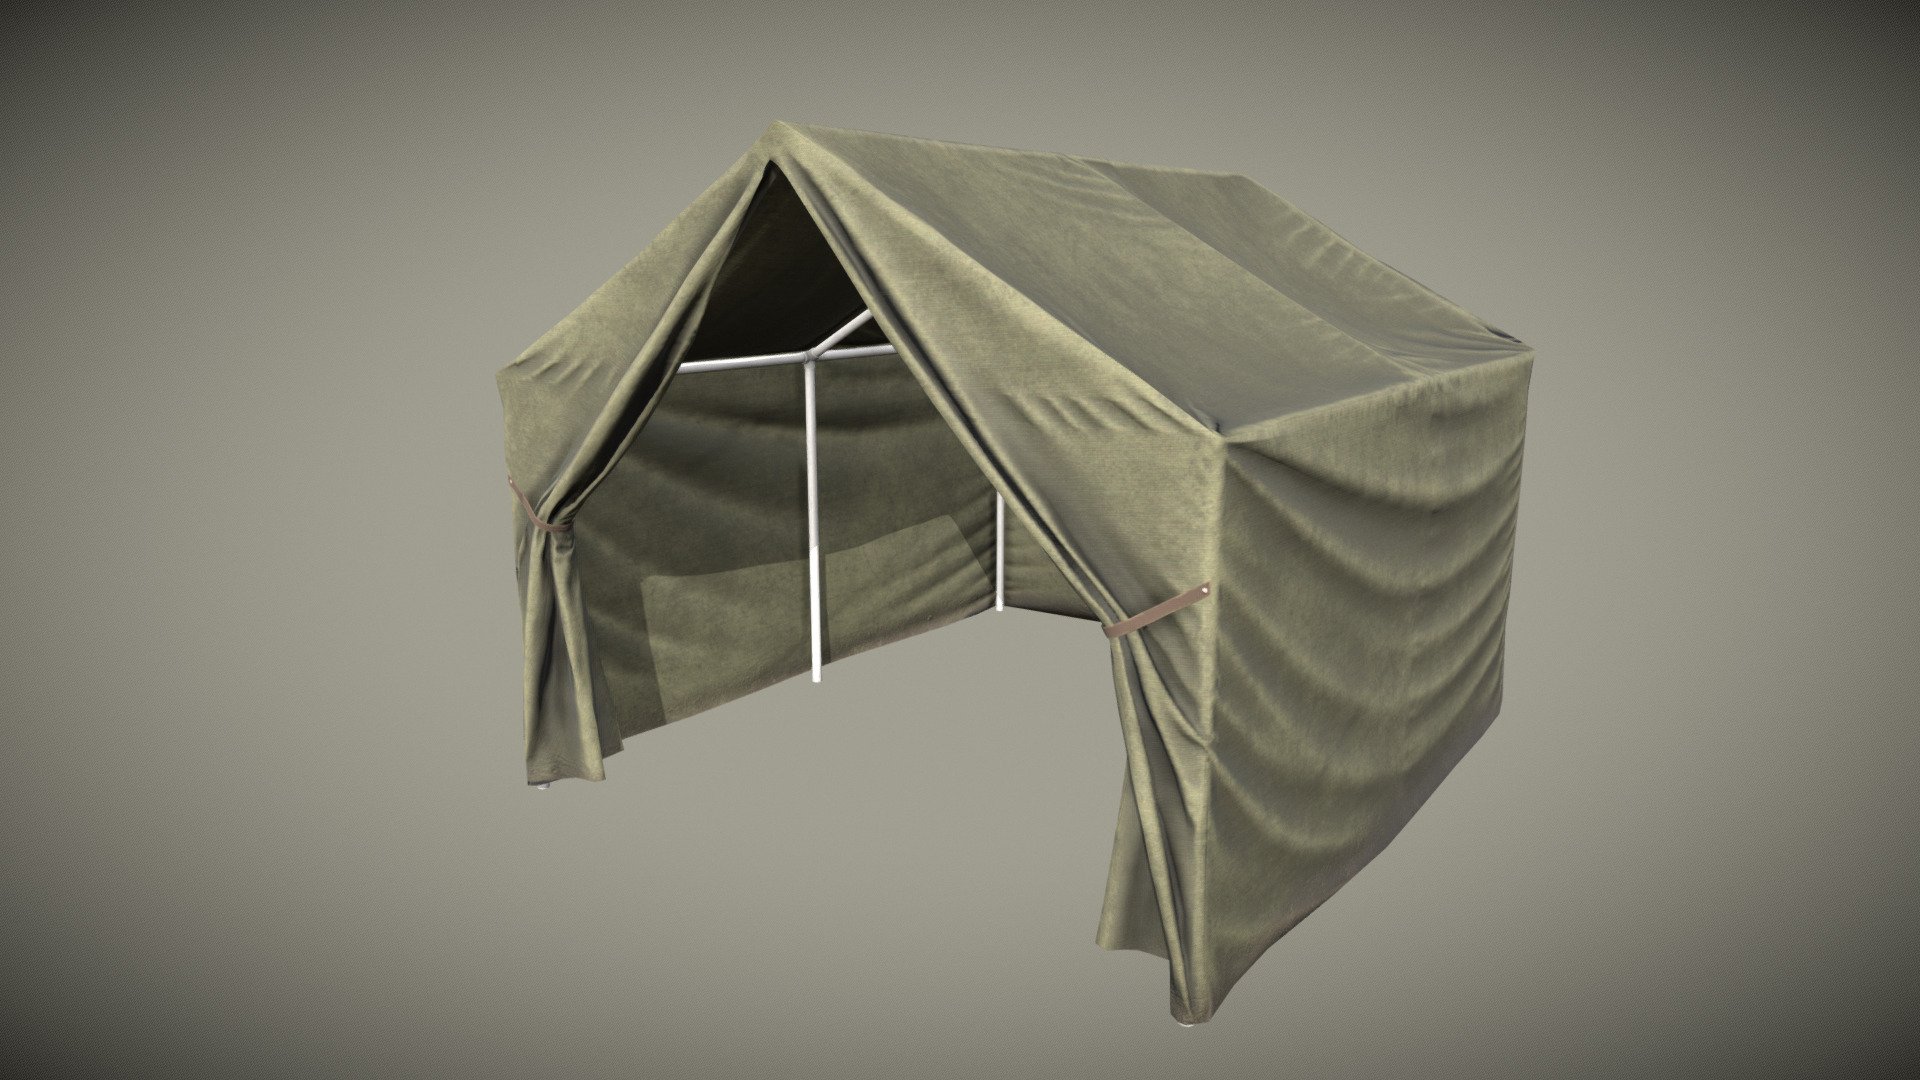 Gameready model of a tent - Explorer's Tent - 3D model by ZippyStardust (Andrea Cabras) (@ZippyStardust) 3d model